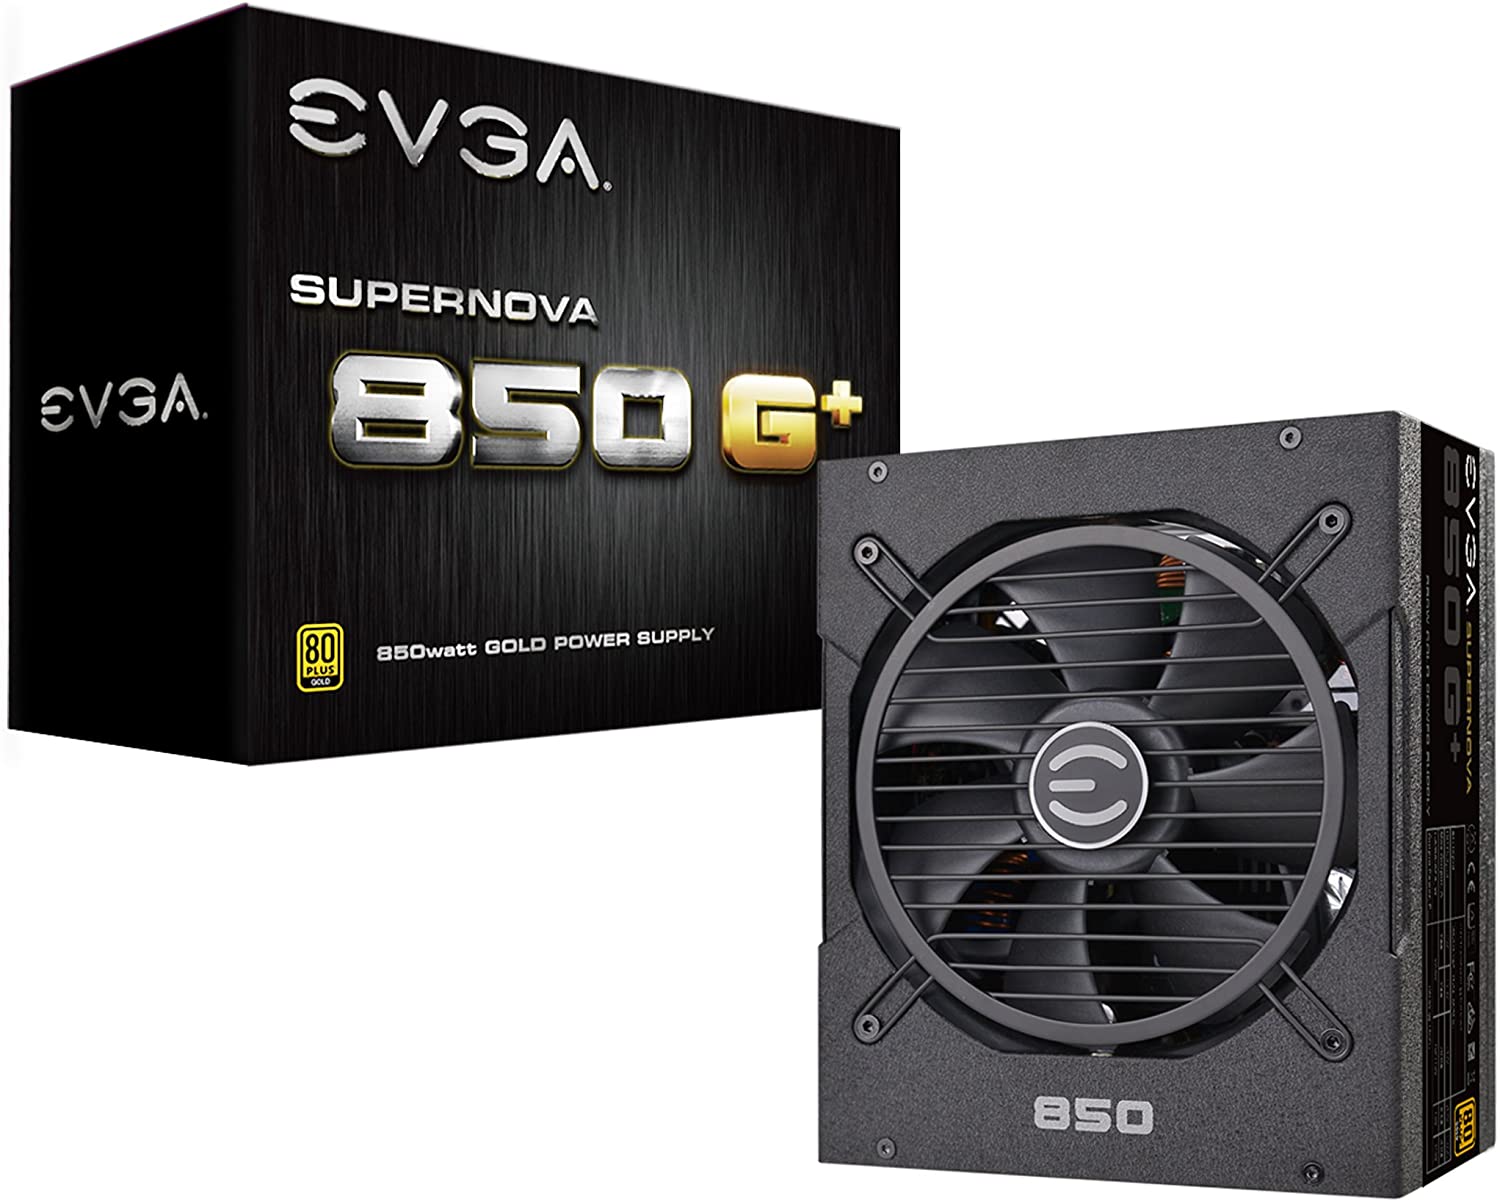 EVGA SuperNOVA 850 G+, 80+ Gold 850W Fully Modular Power Supply (120-GP-0850-X1) $108.64 + Free Shipping